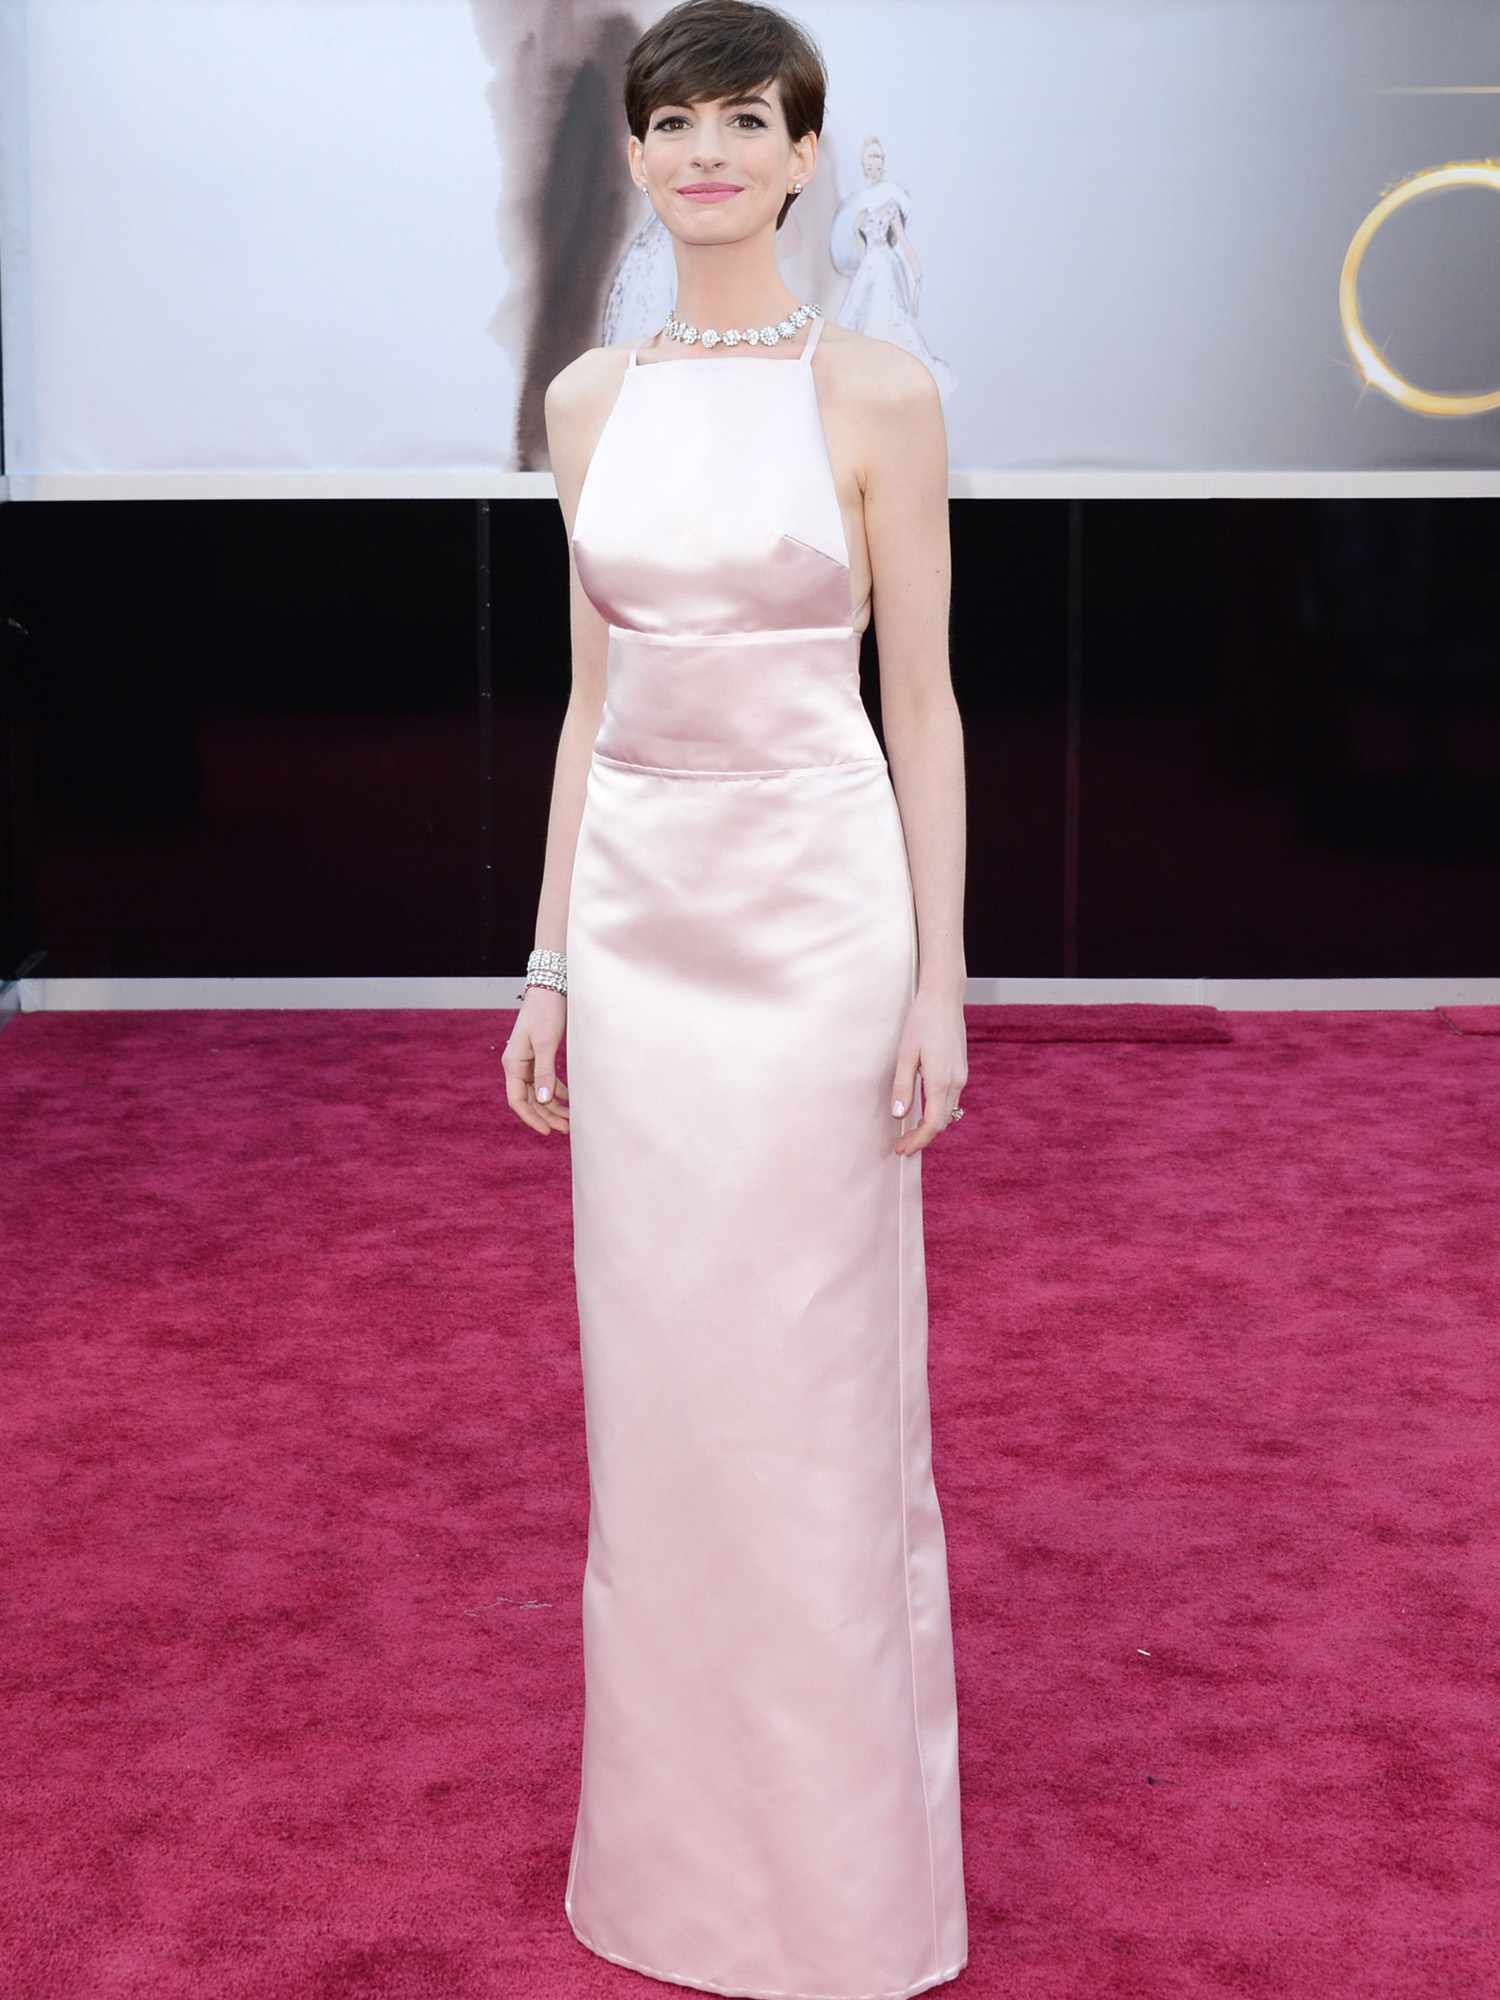 Anne Hathaway usa vestido Prada rosa claro e joias brilhantes no Oscar 2013